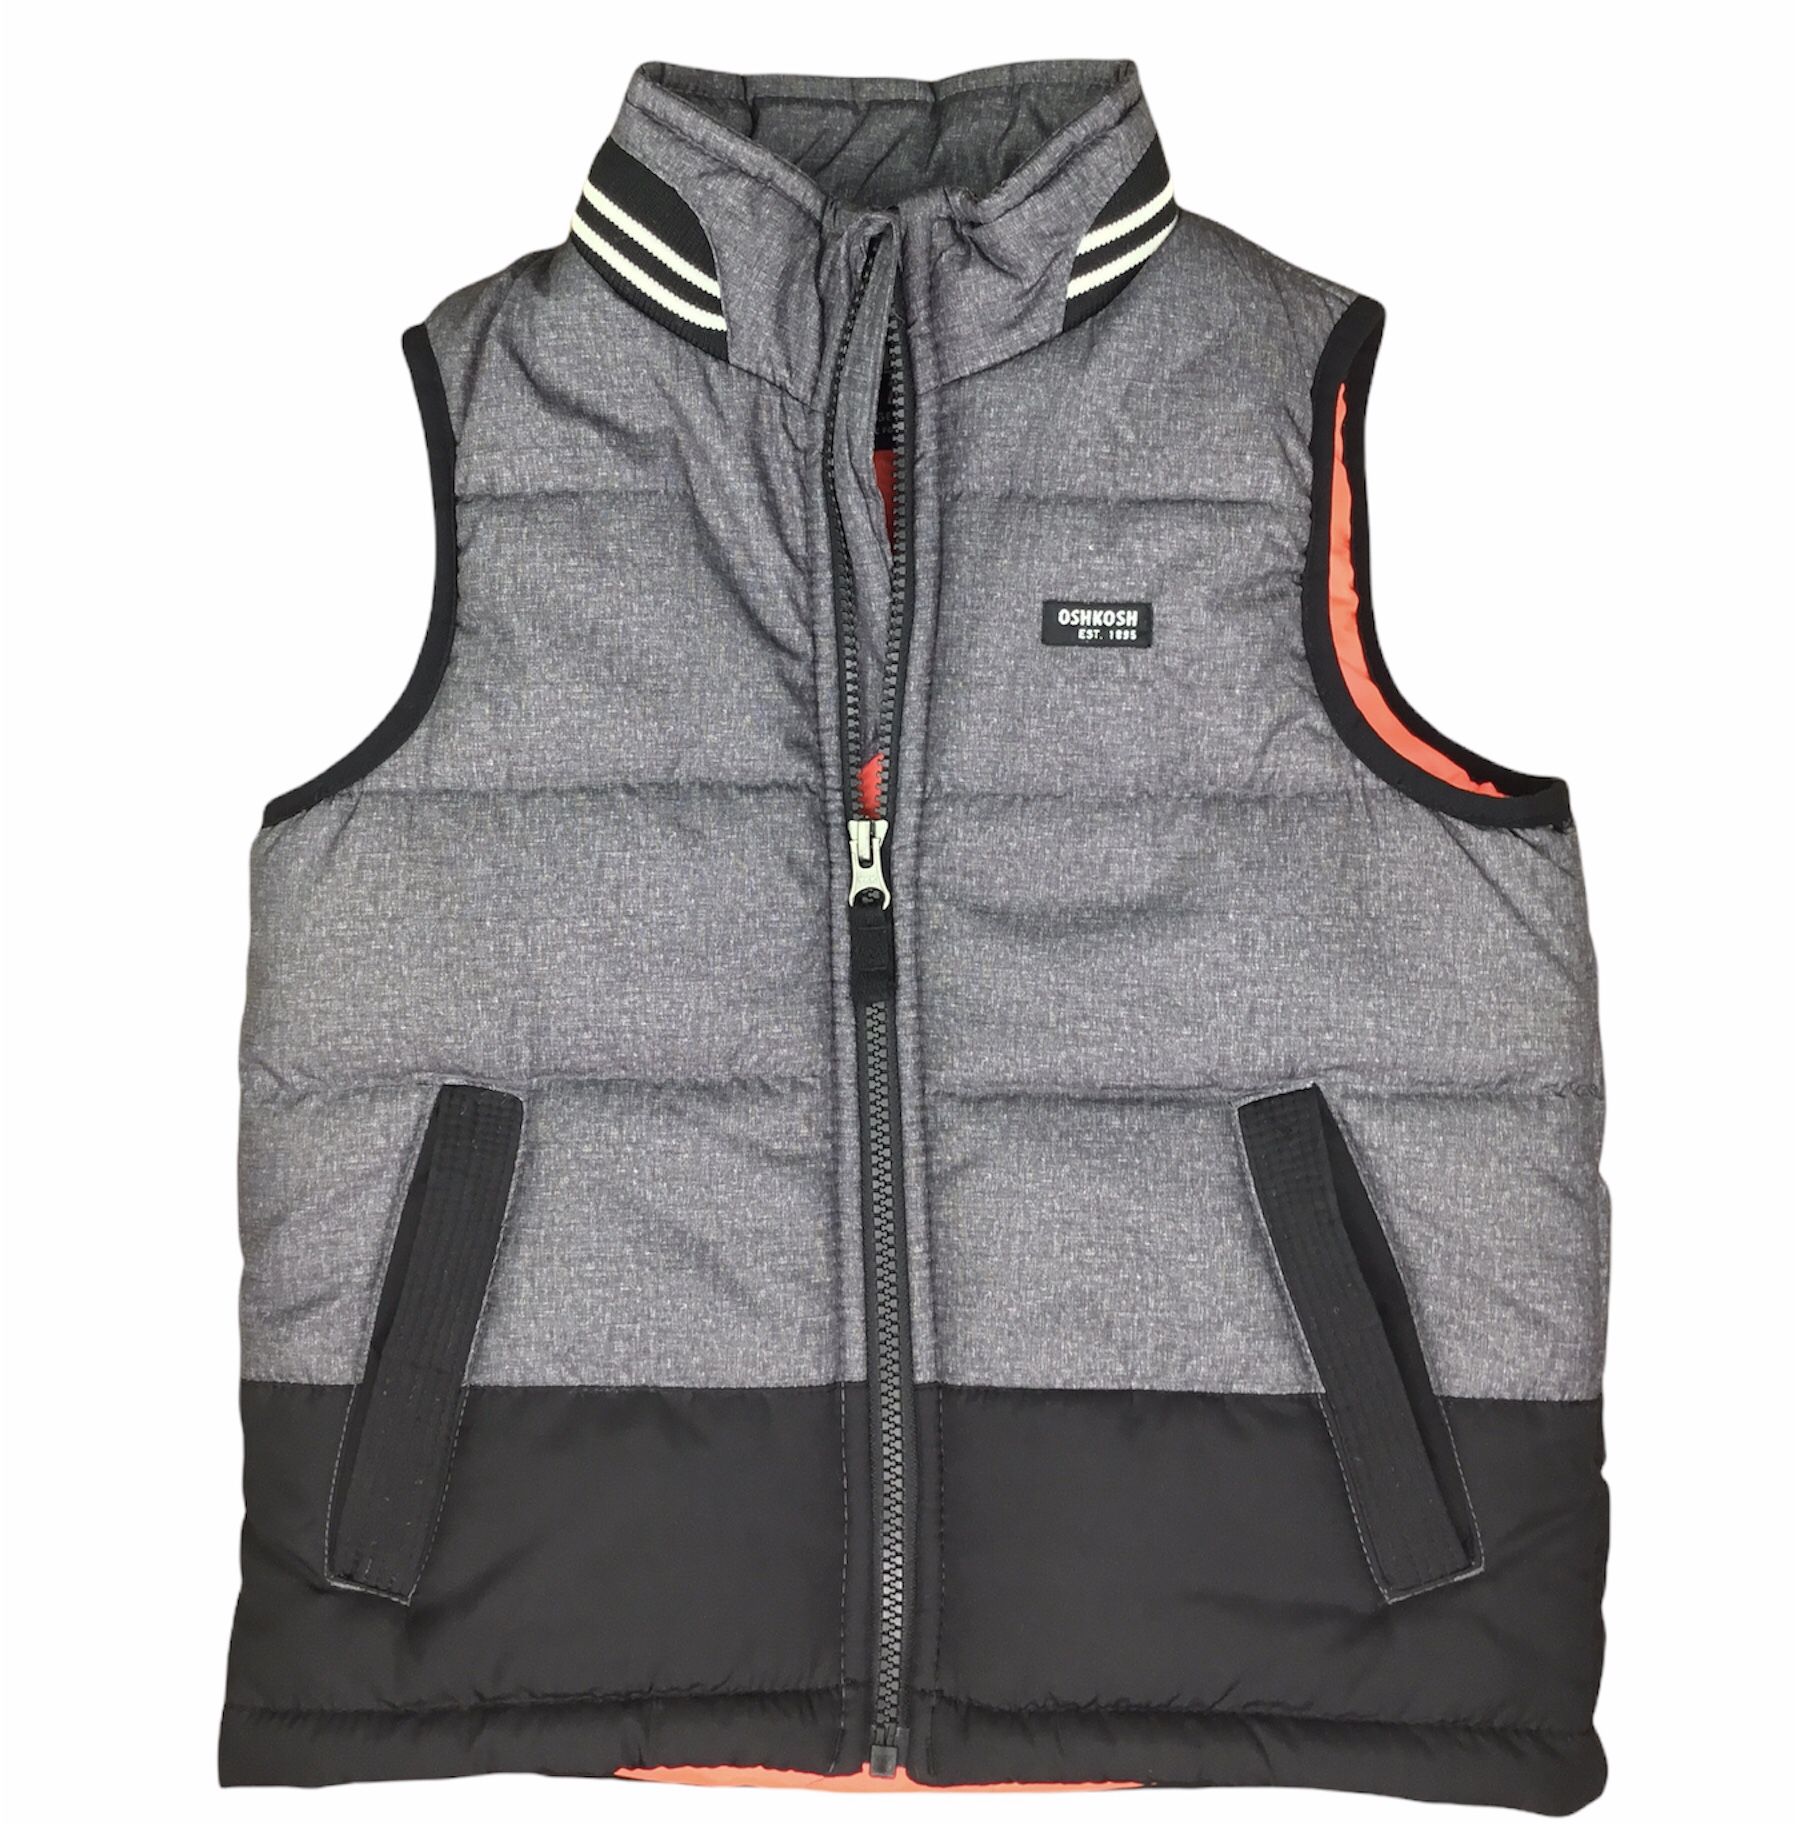 Oshkosh Boys Size 5 Insulated Soft Warm Comfy Black Silver Red Vest Full Zip EUC 